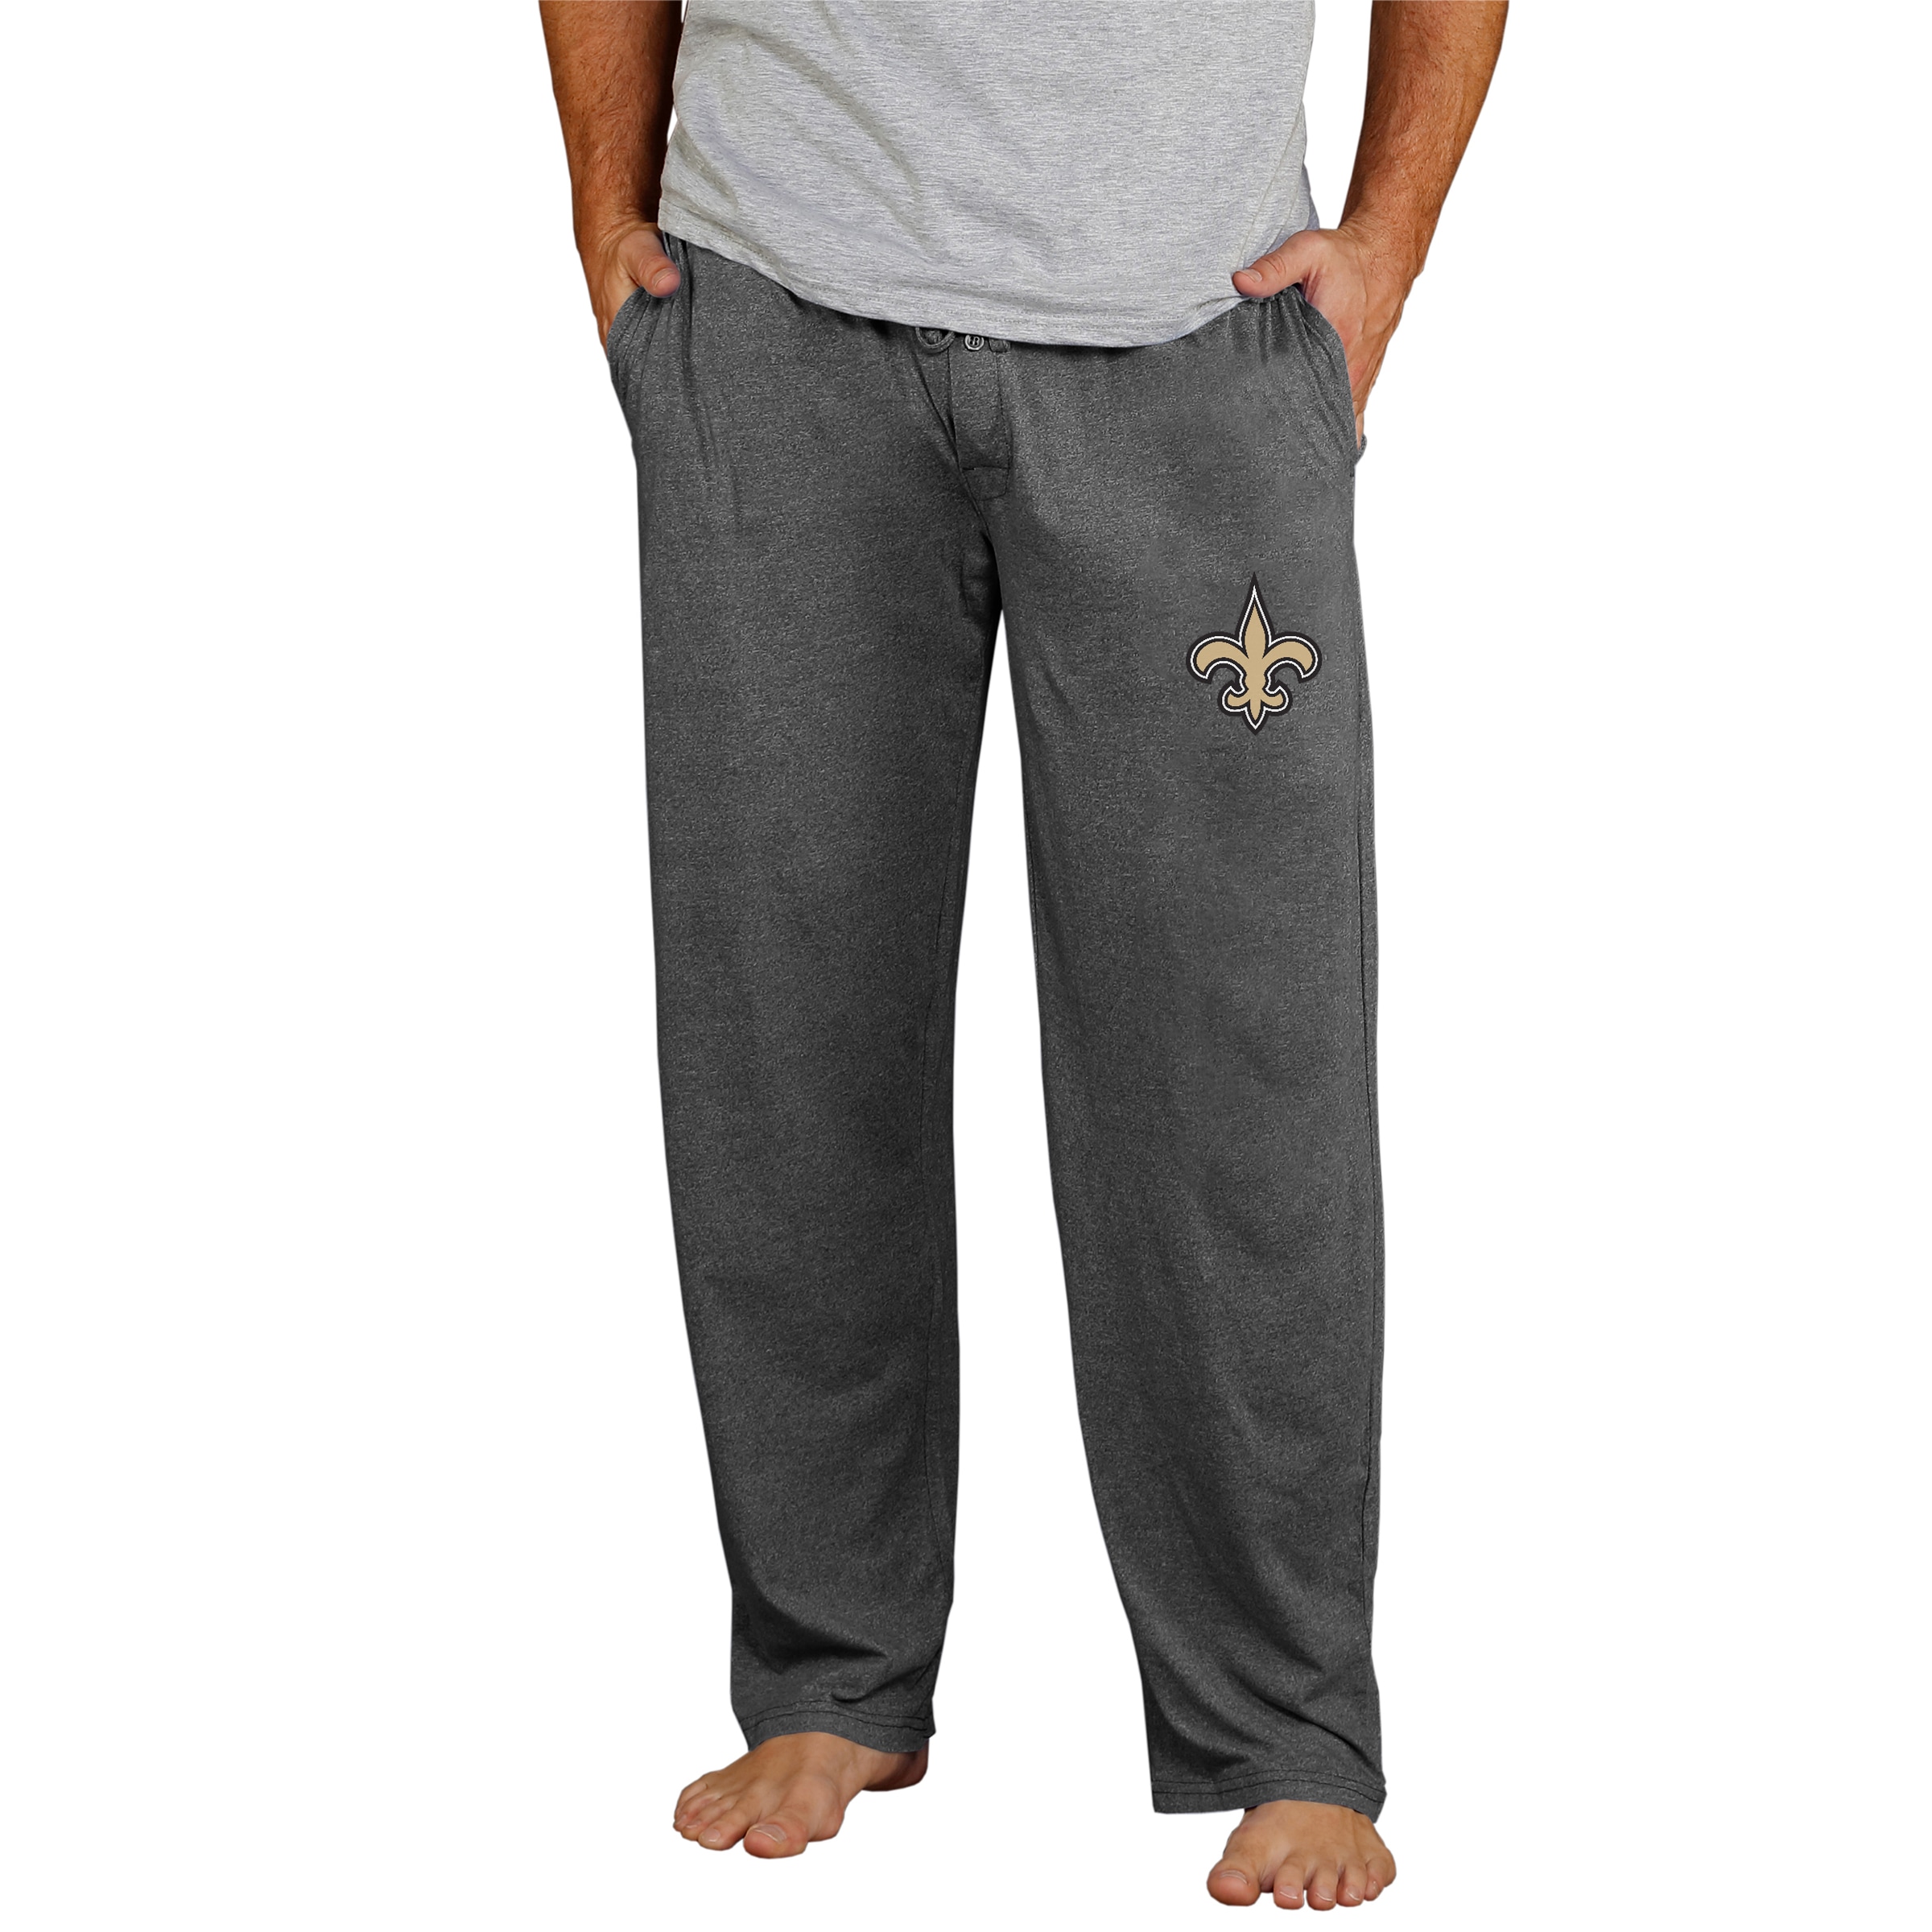 Men's Concepts Sport Charcoal New Orleans Saints Lightweight Quest Knit Sleep Pants - image 1 of 1